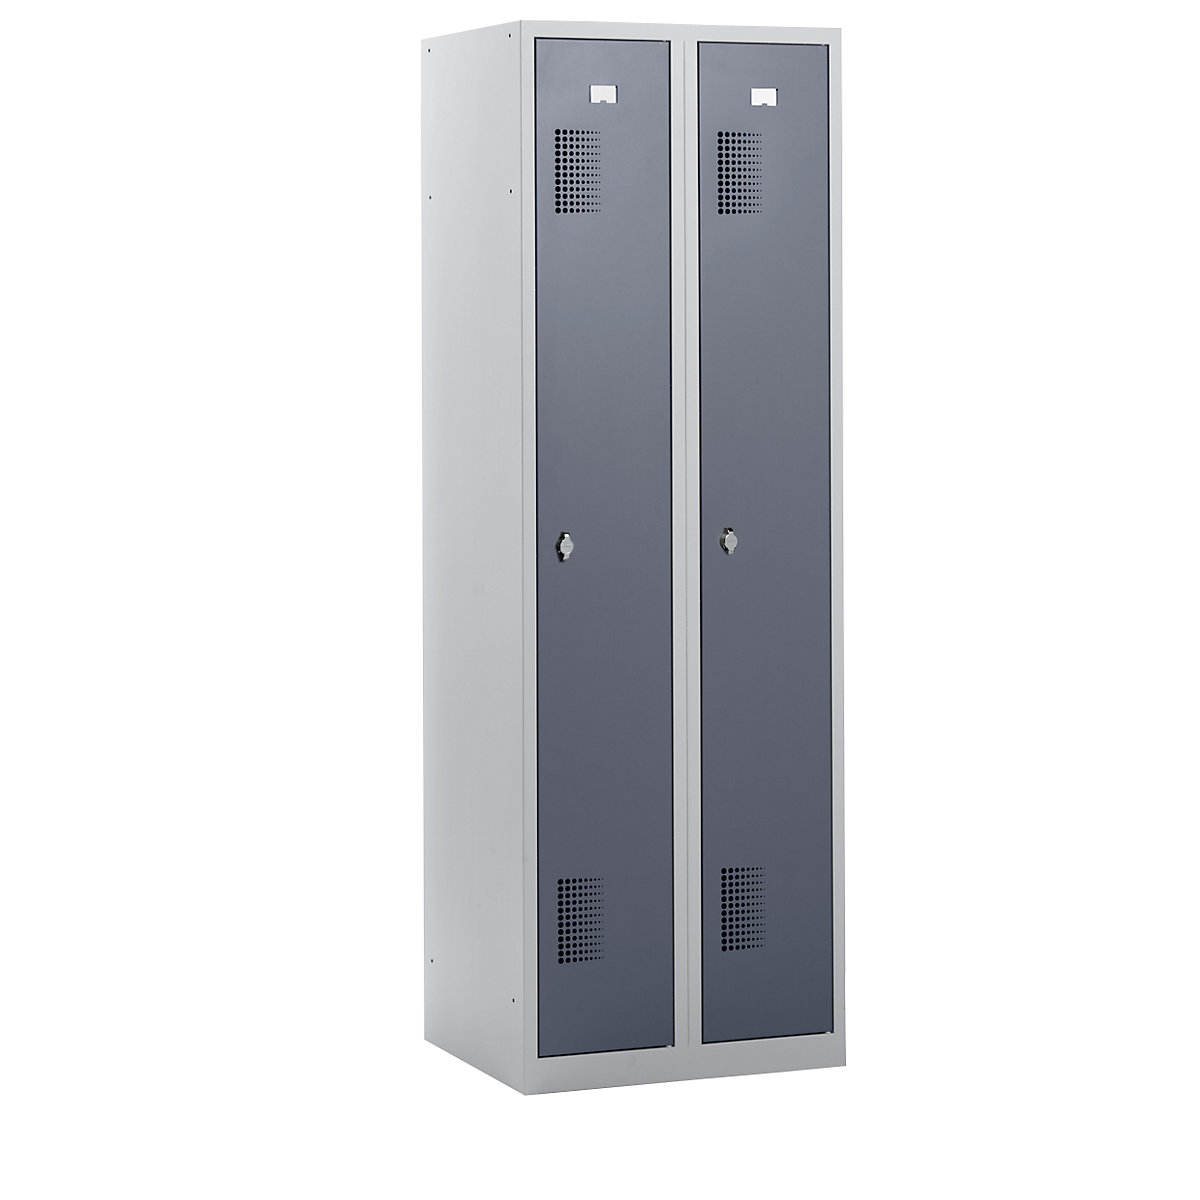 AMSTERDAM cloakroom locker – eurokraft basic, height 1800 mm, width 600 mm, 2 x 298 mm wide compartments, with fittings for padlock, light grey body / basalt grey doors-23